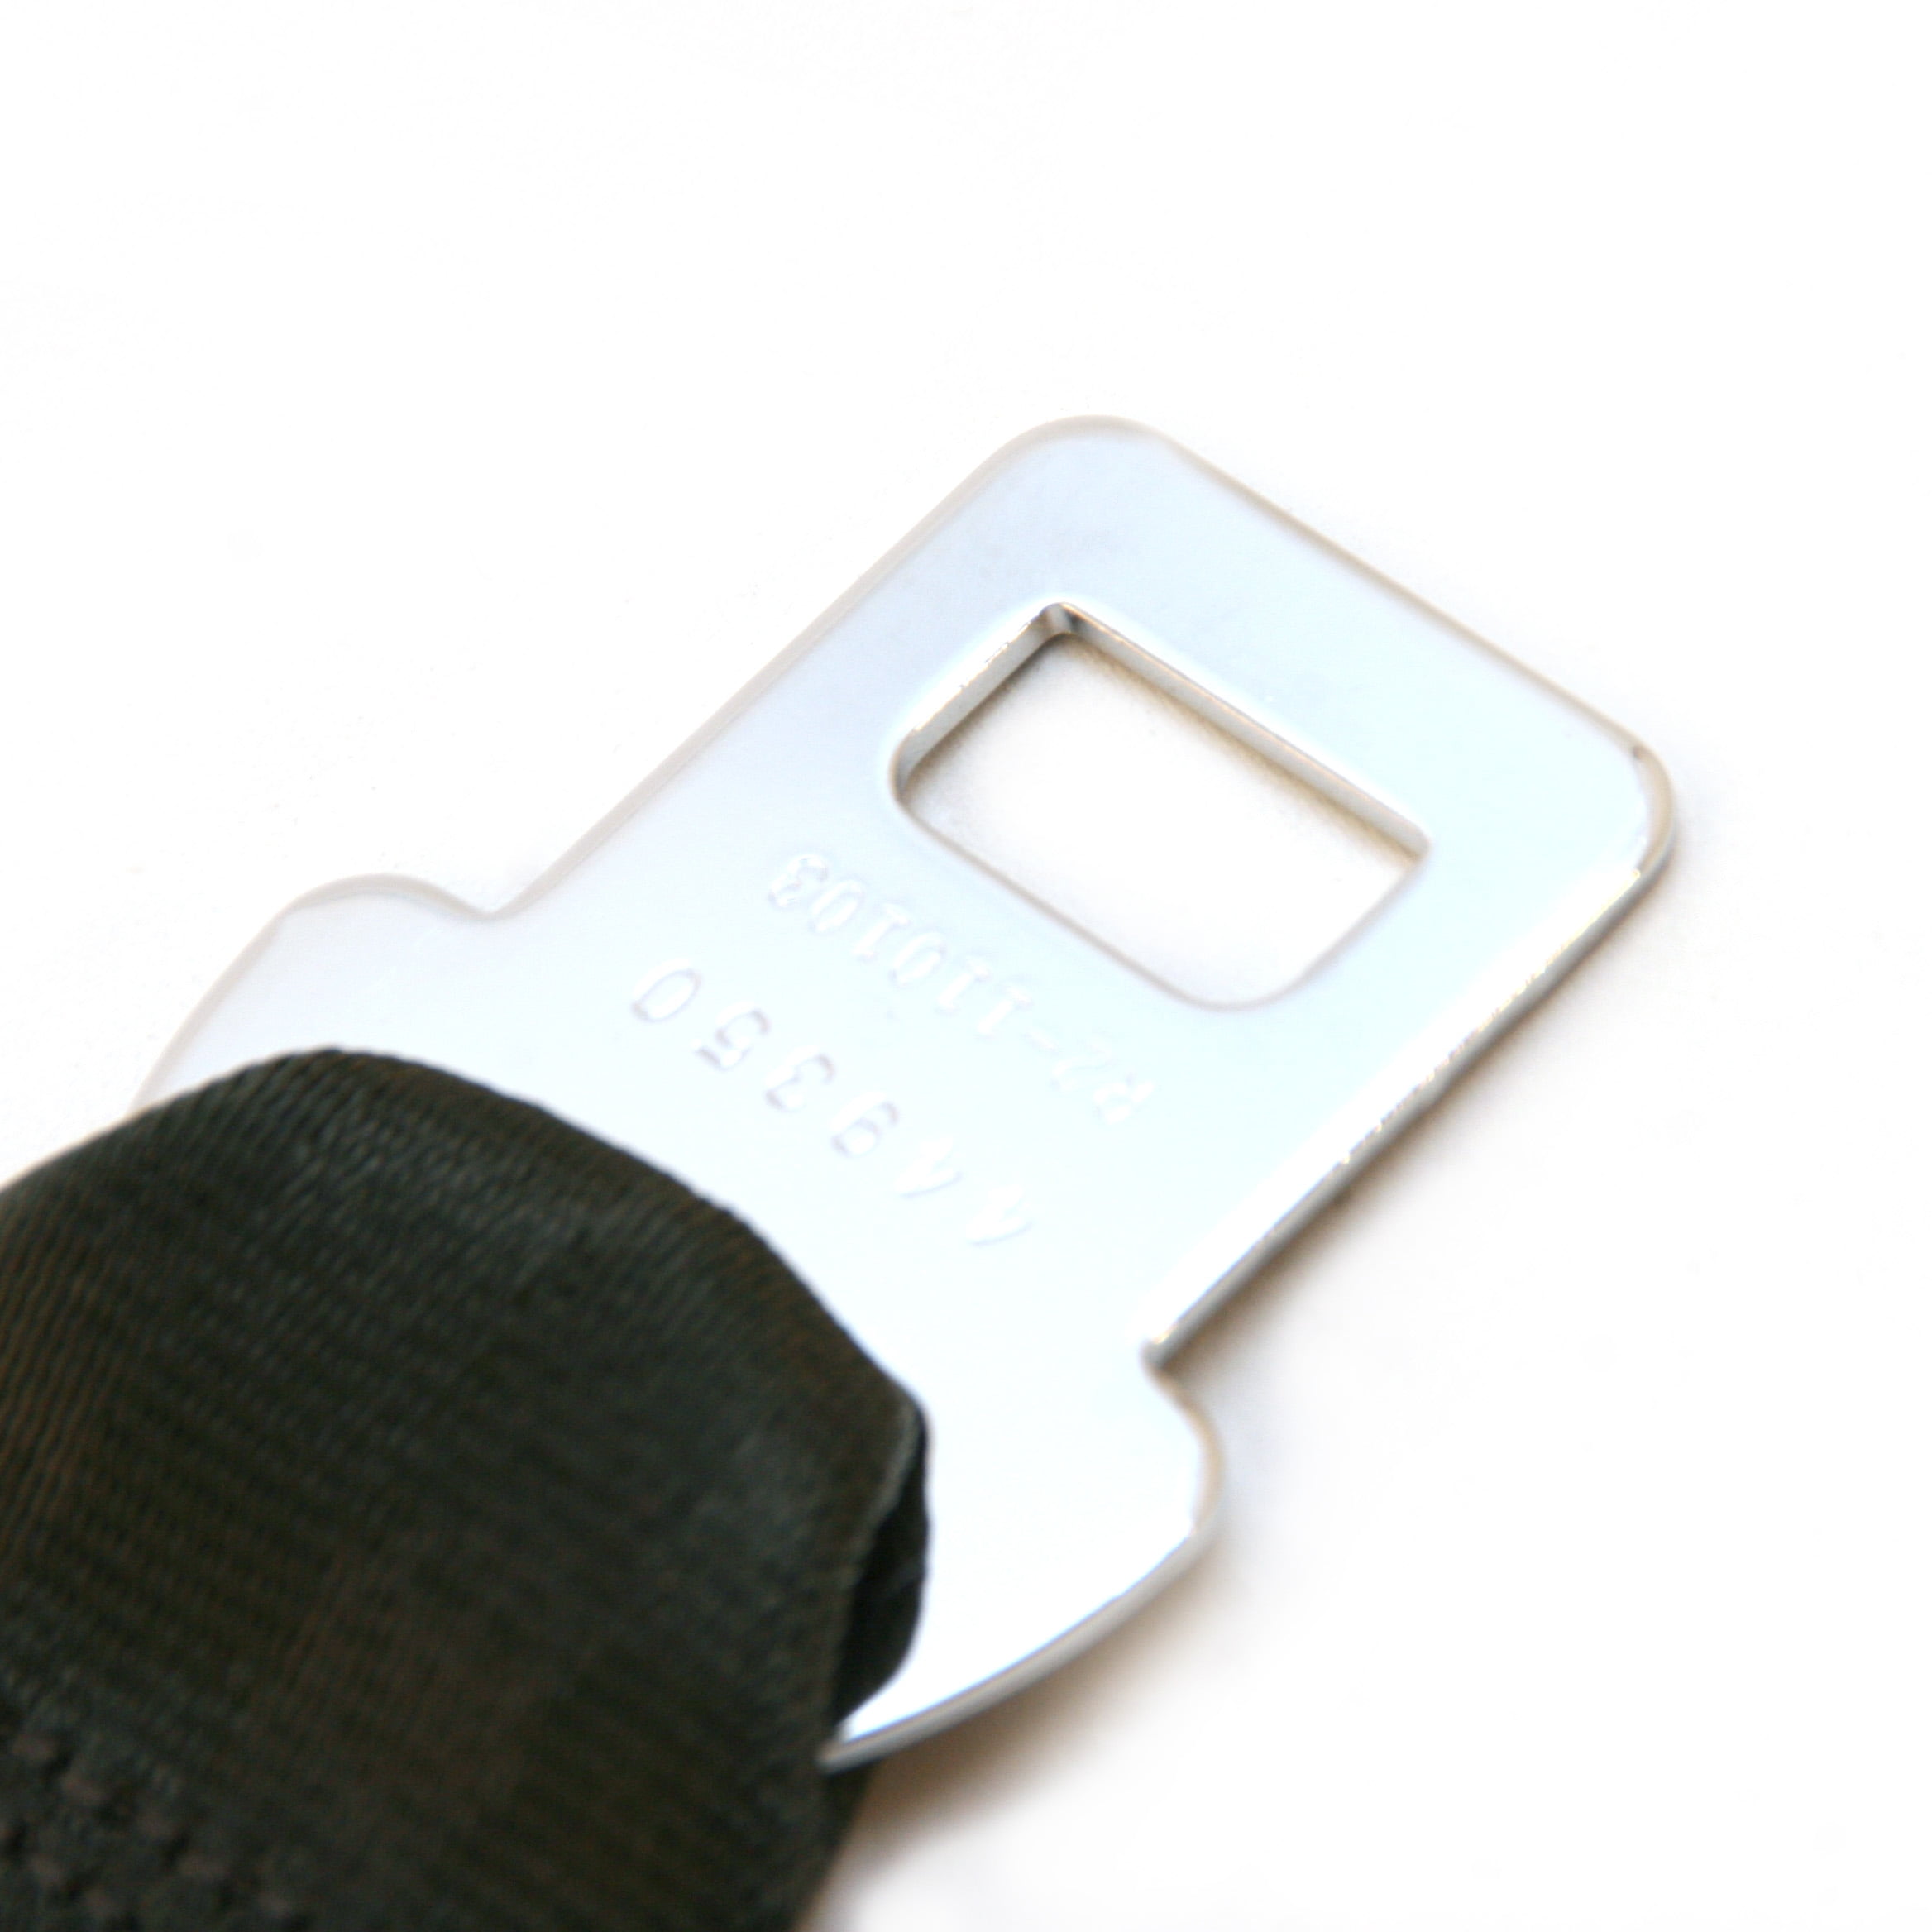 Mirone Universal Adjustable Airplane Seat Belt Extender Seatbelt Extension